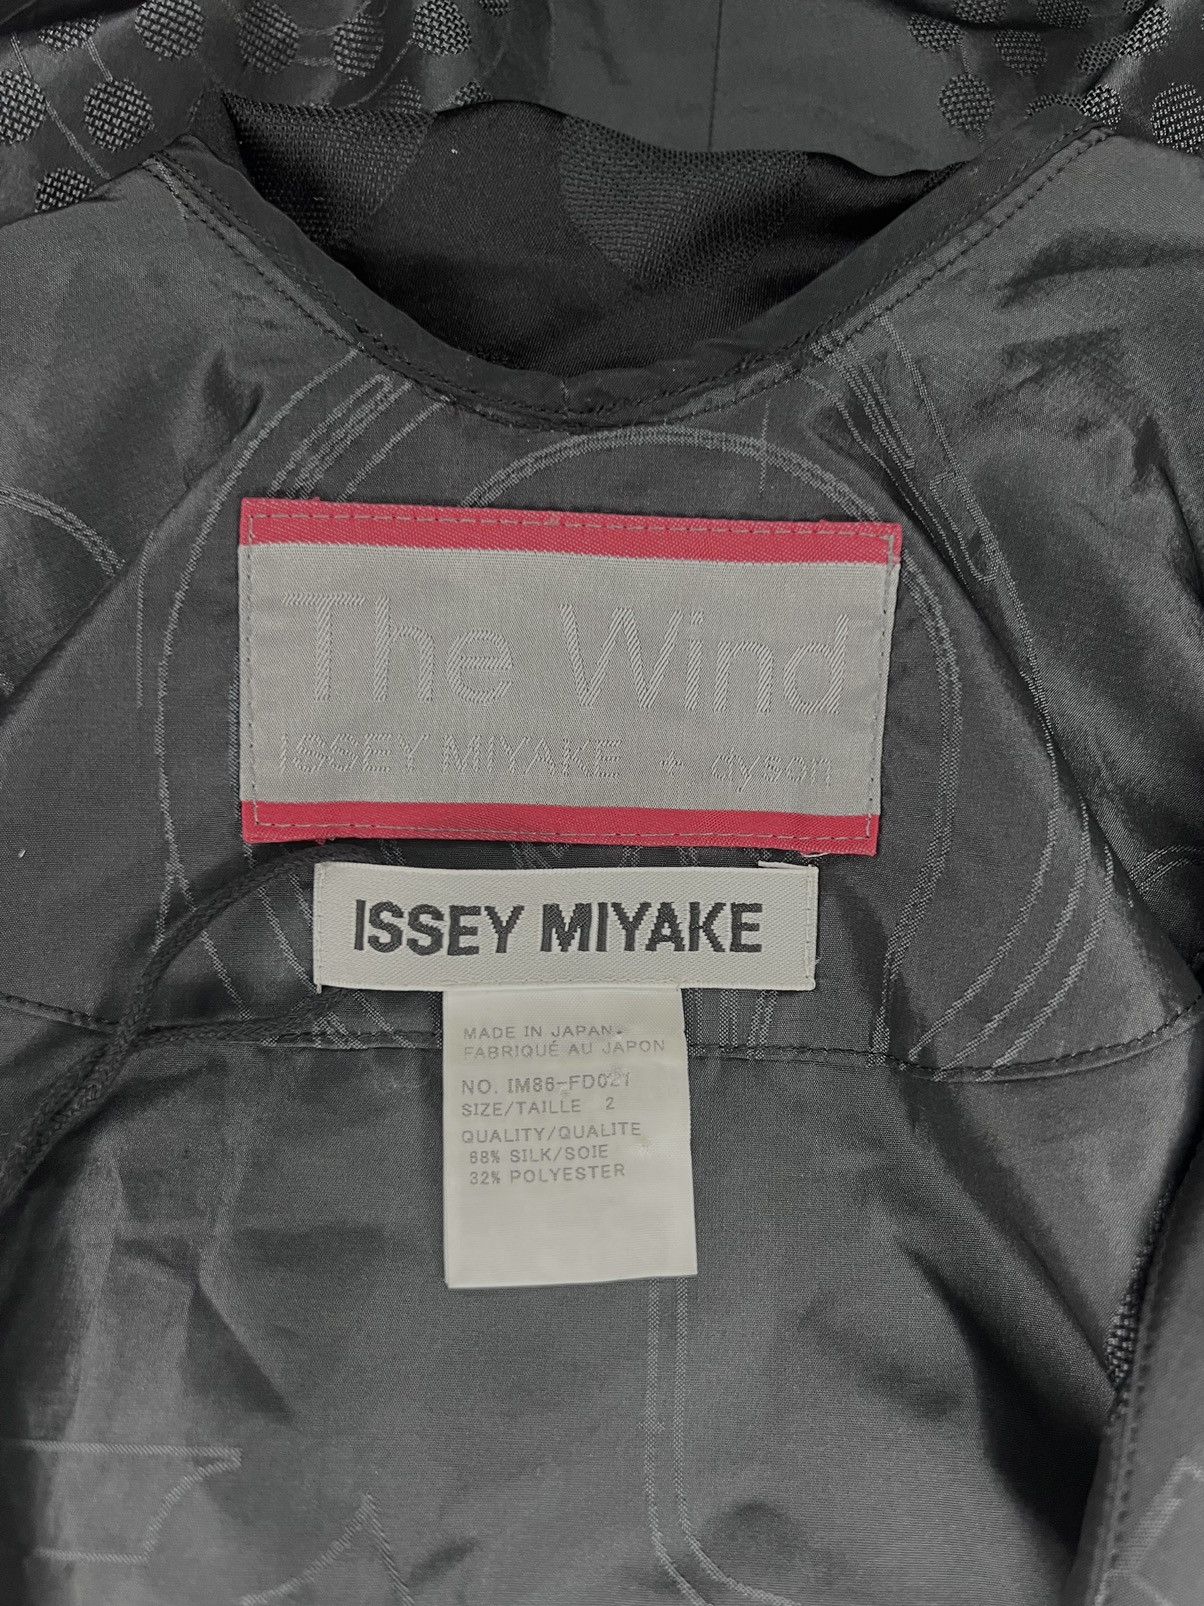 Issey Miyake S/S 08 Issey Miyake + Dyson “The Wind” Dress Size M / US 6-8 / IT 42-44 - 6 Thumbnail